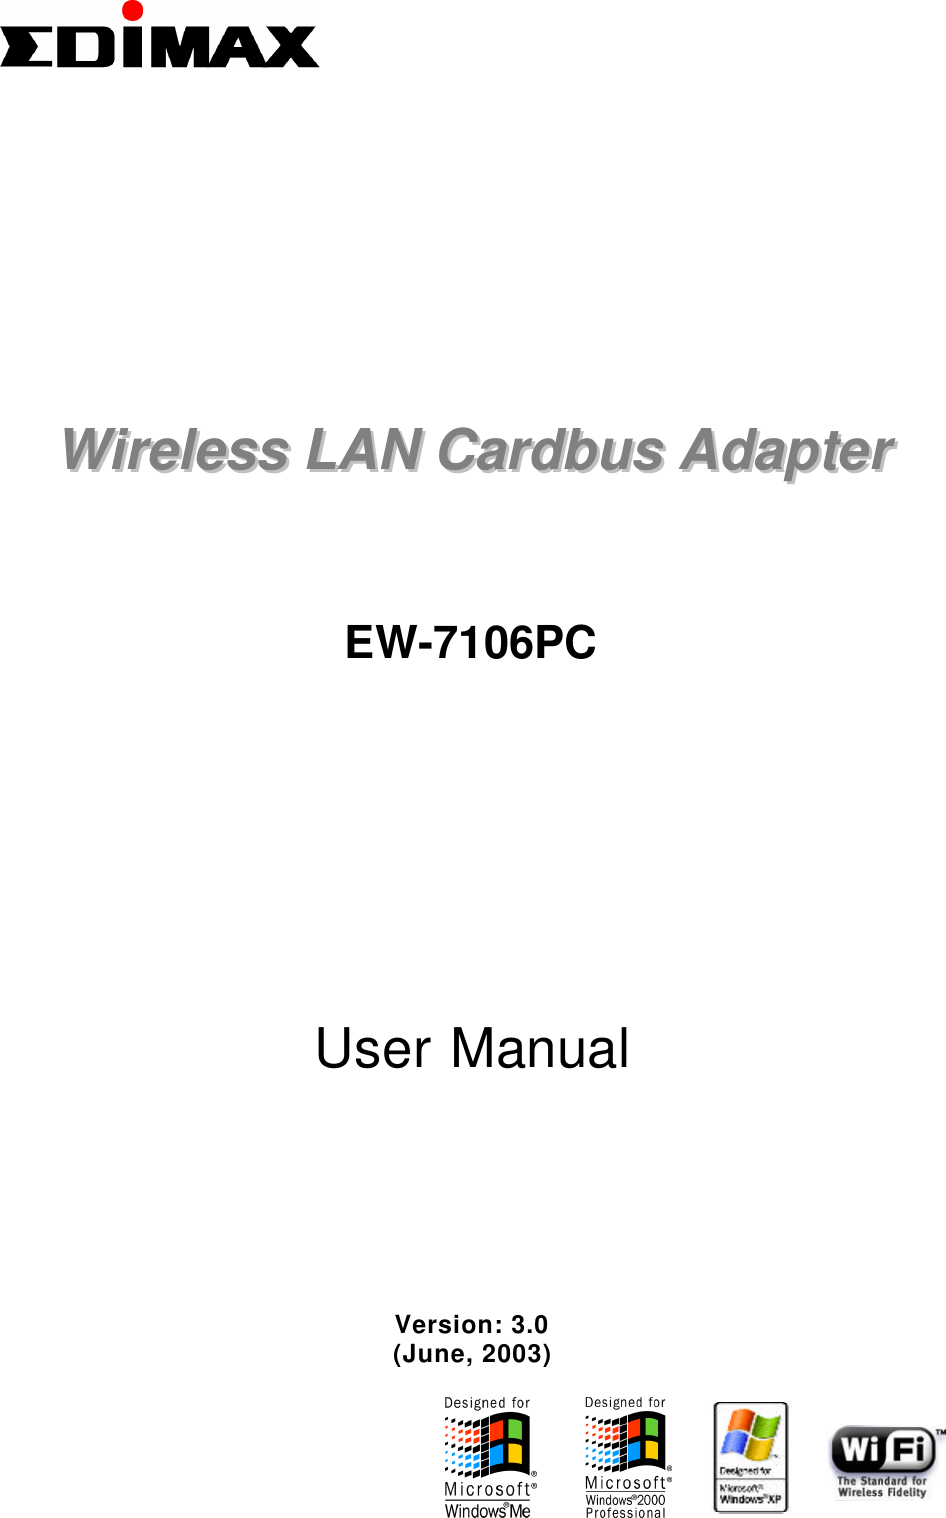              WWiirreelleessss  LLAANN  CCaarrddbbuuss  AAddaapptteerr                                                         EW-7106PC            User Manual         Version: 3.0 (June, 2003)                                                                         